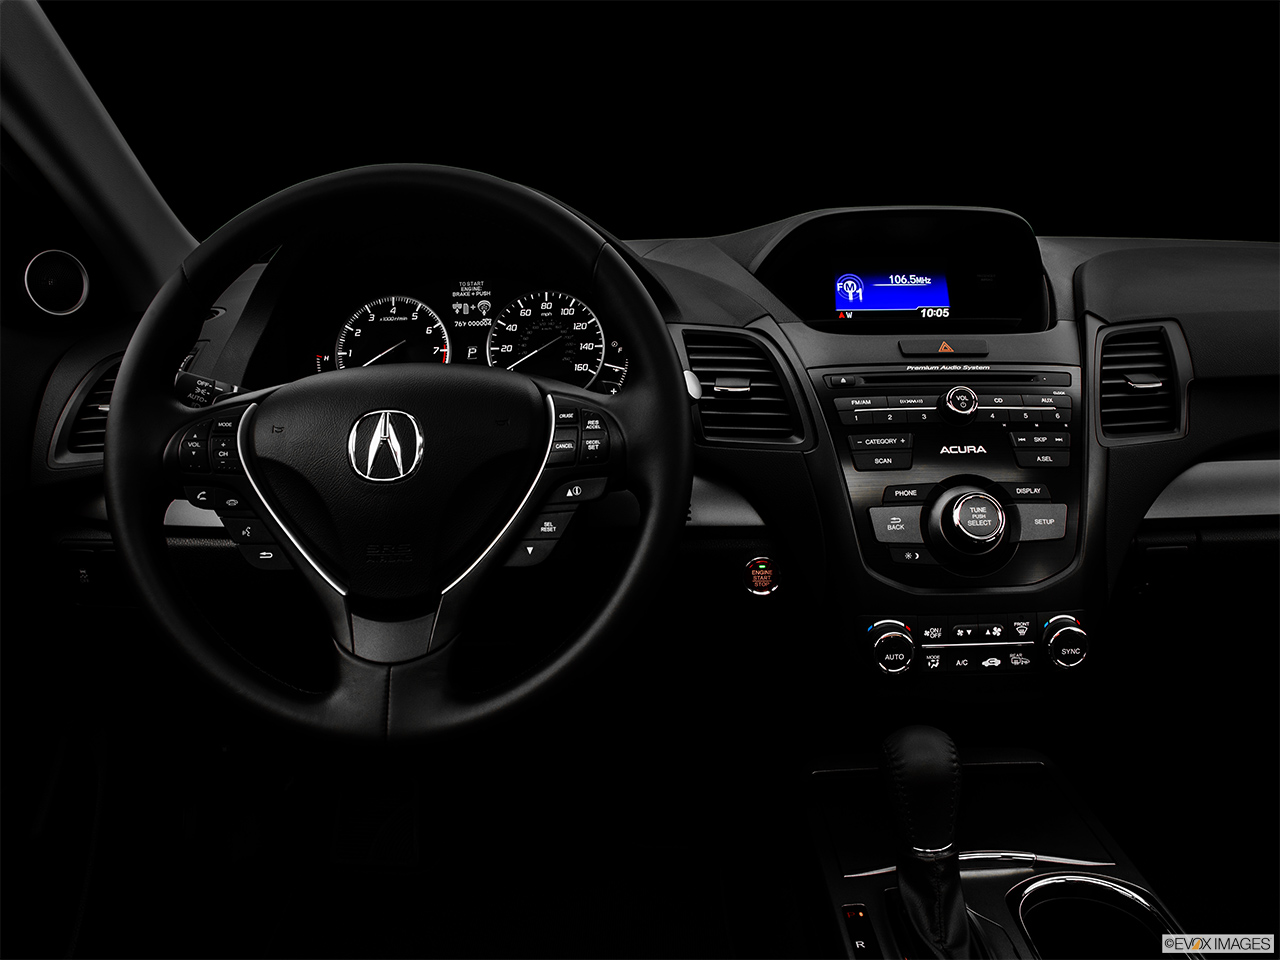 2015 Acura RDX AWD Centered wide dash shot - "night" shot. 